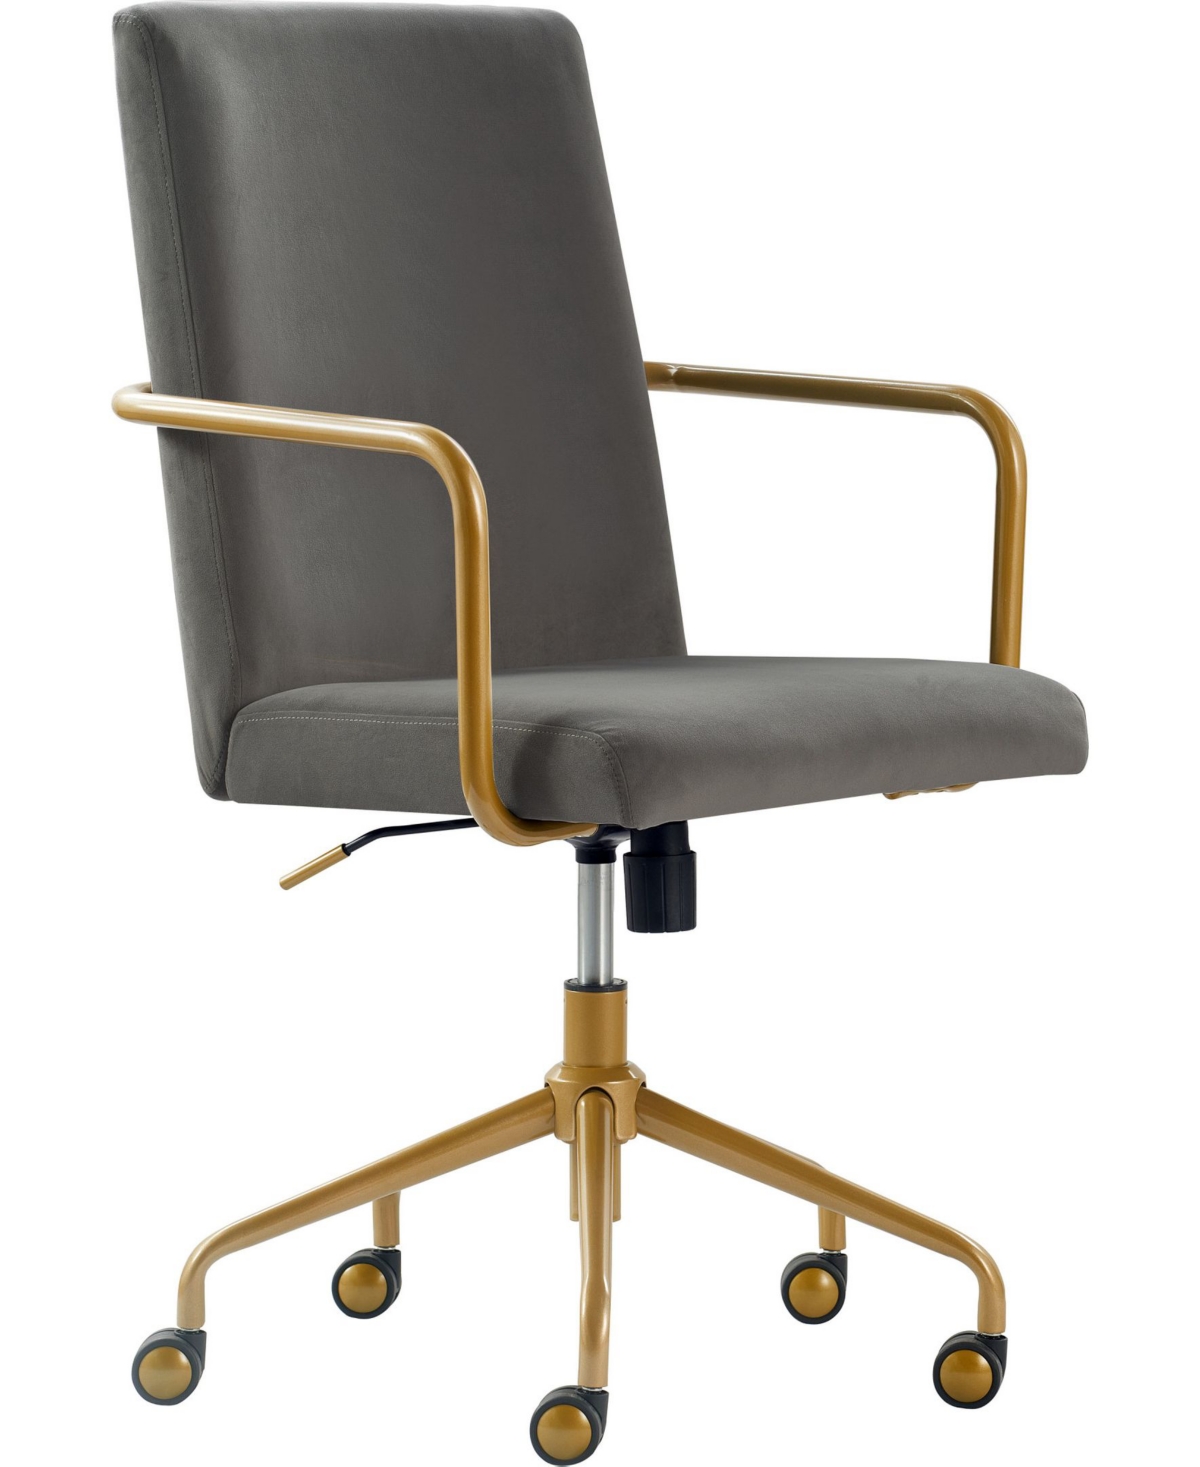 Elle Decor Giselle Office Chair In Grey